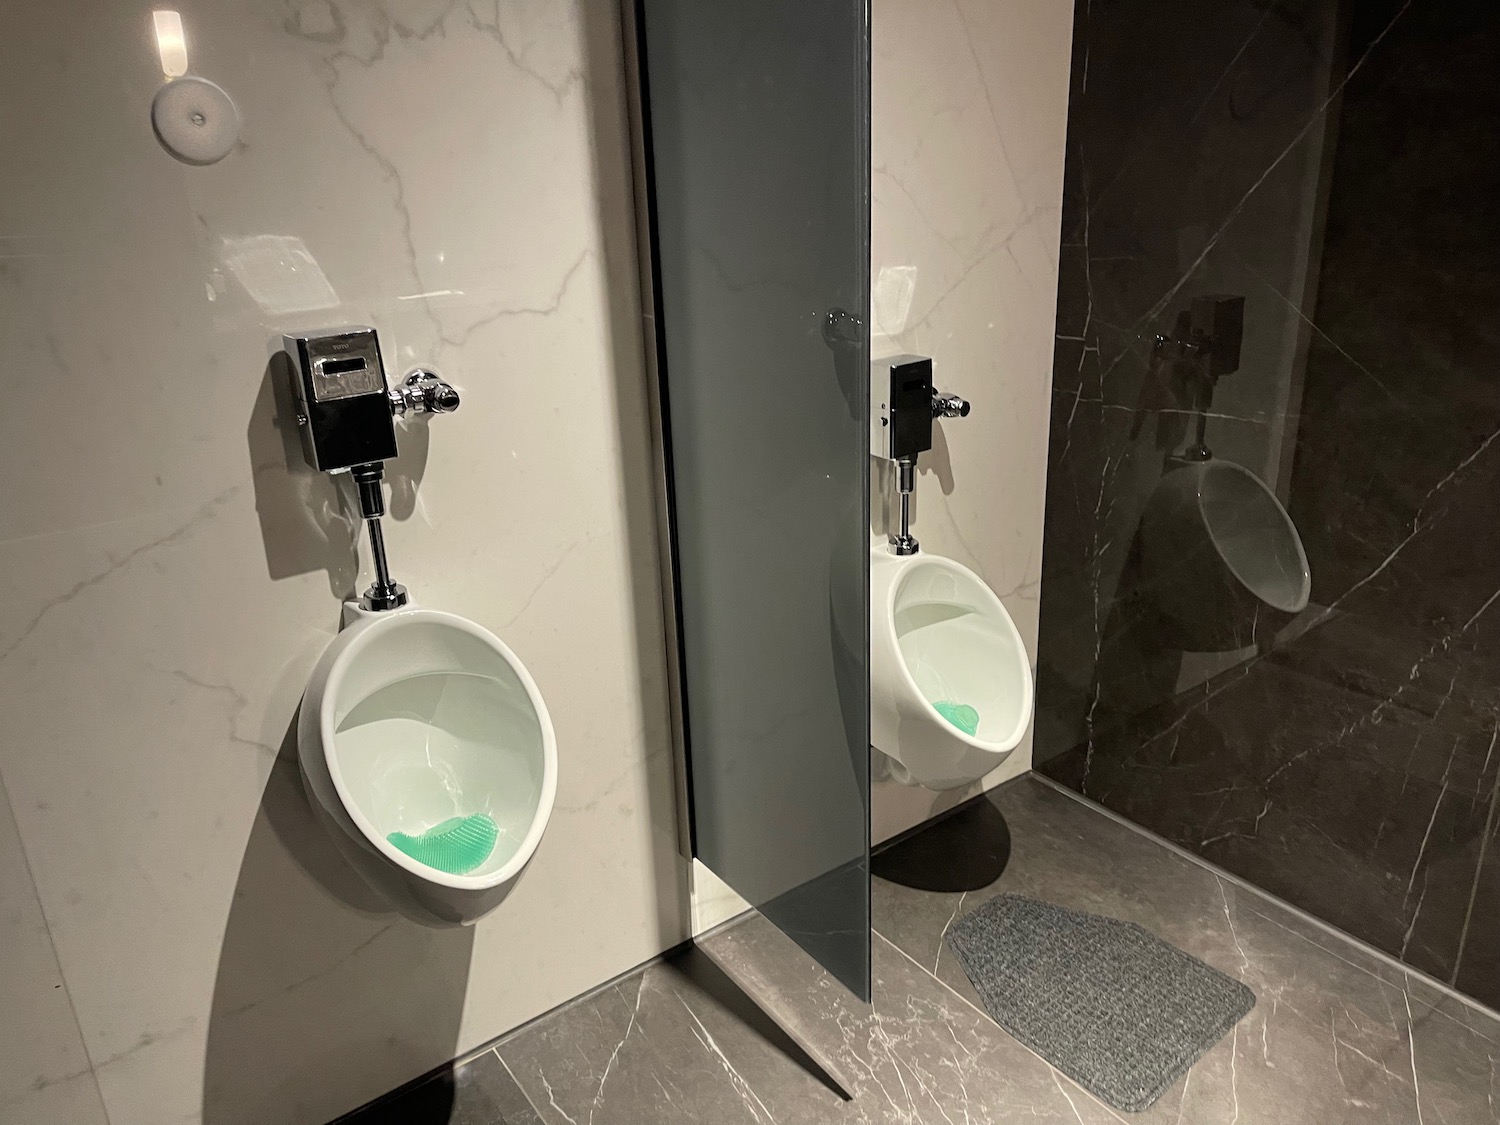 a urinals in a bathroom